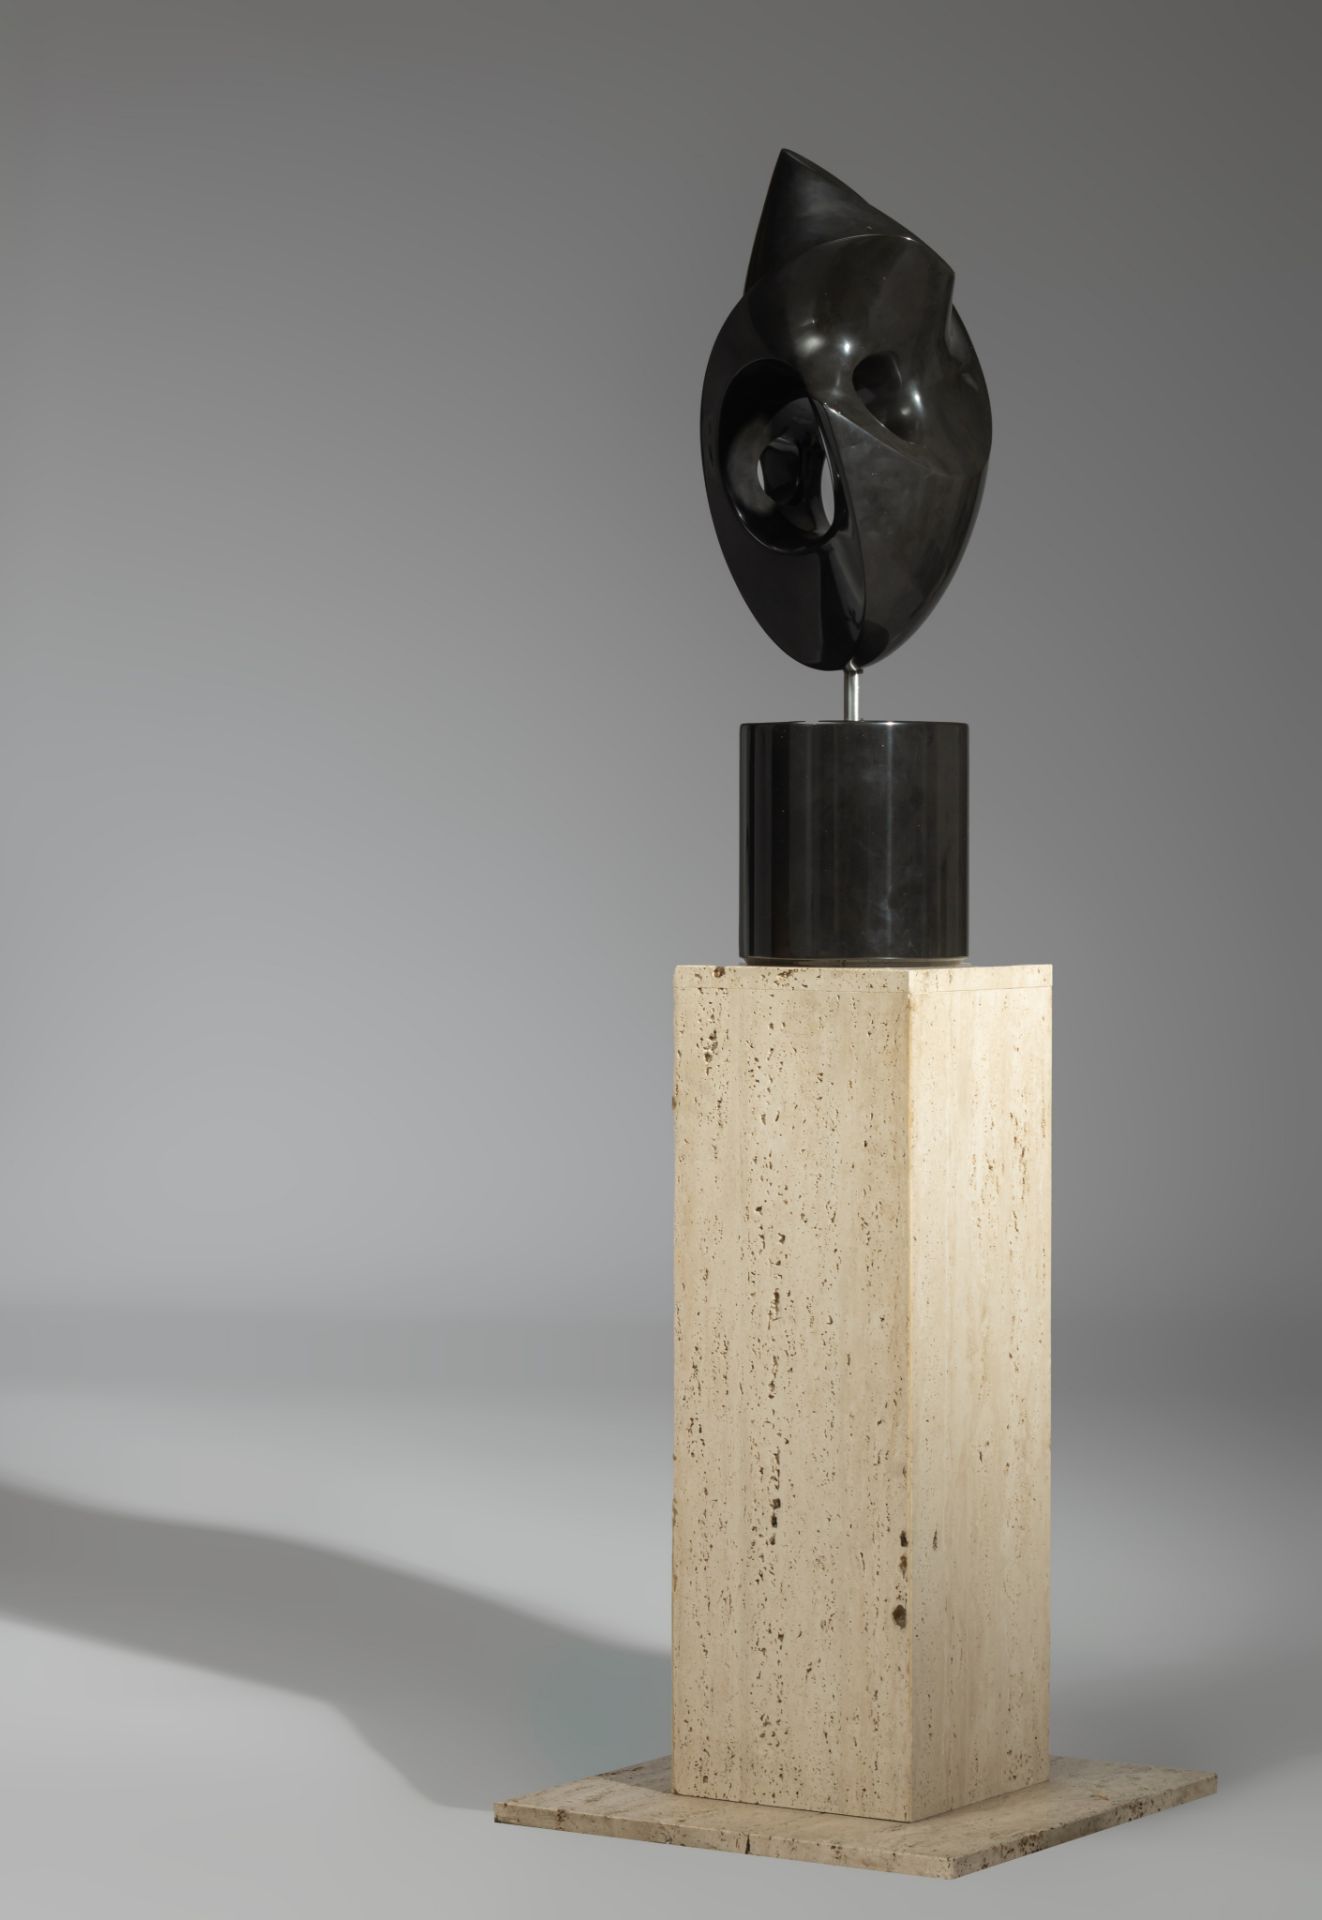 Jeanine Behaeghel (1940-1993), abstract sculpture, 1988, noir Belge marble on a travertine pedestal, - Image 9 of 18